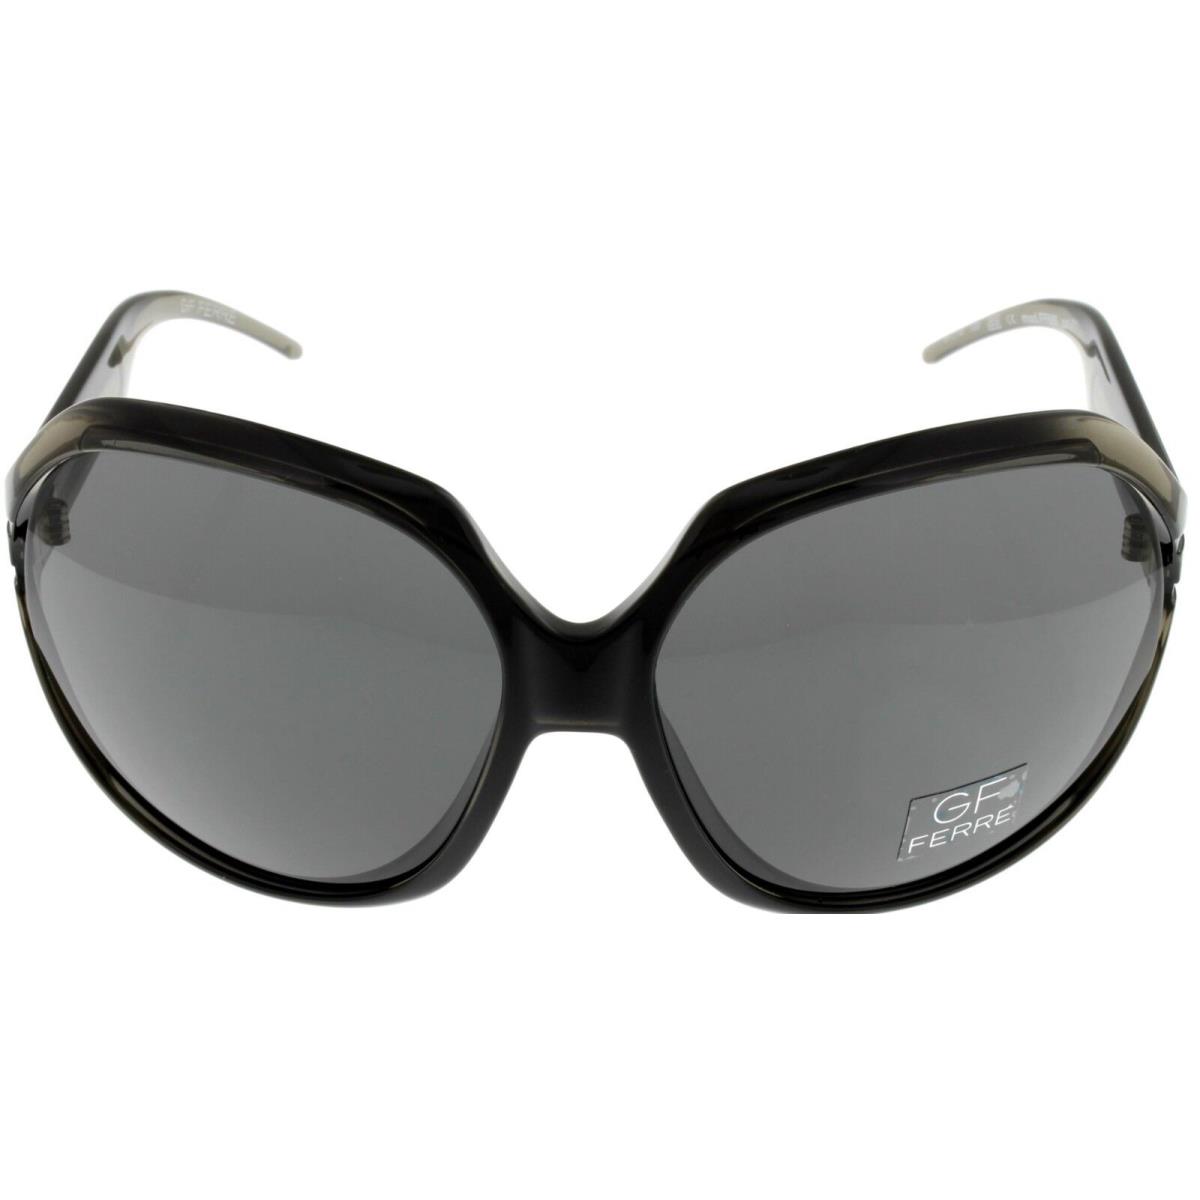 Gianfranco Ferre Sunglasses Women Black Grey Transparent Square FF686 01